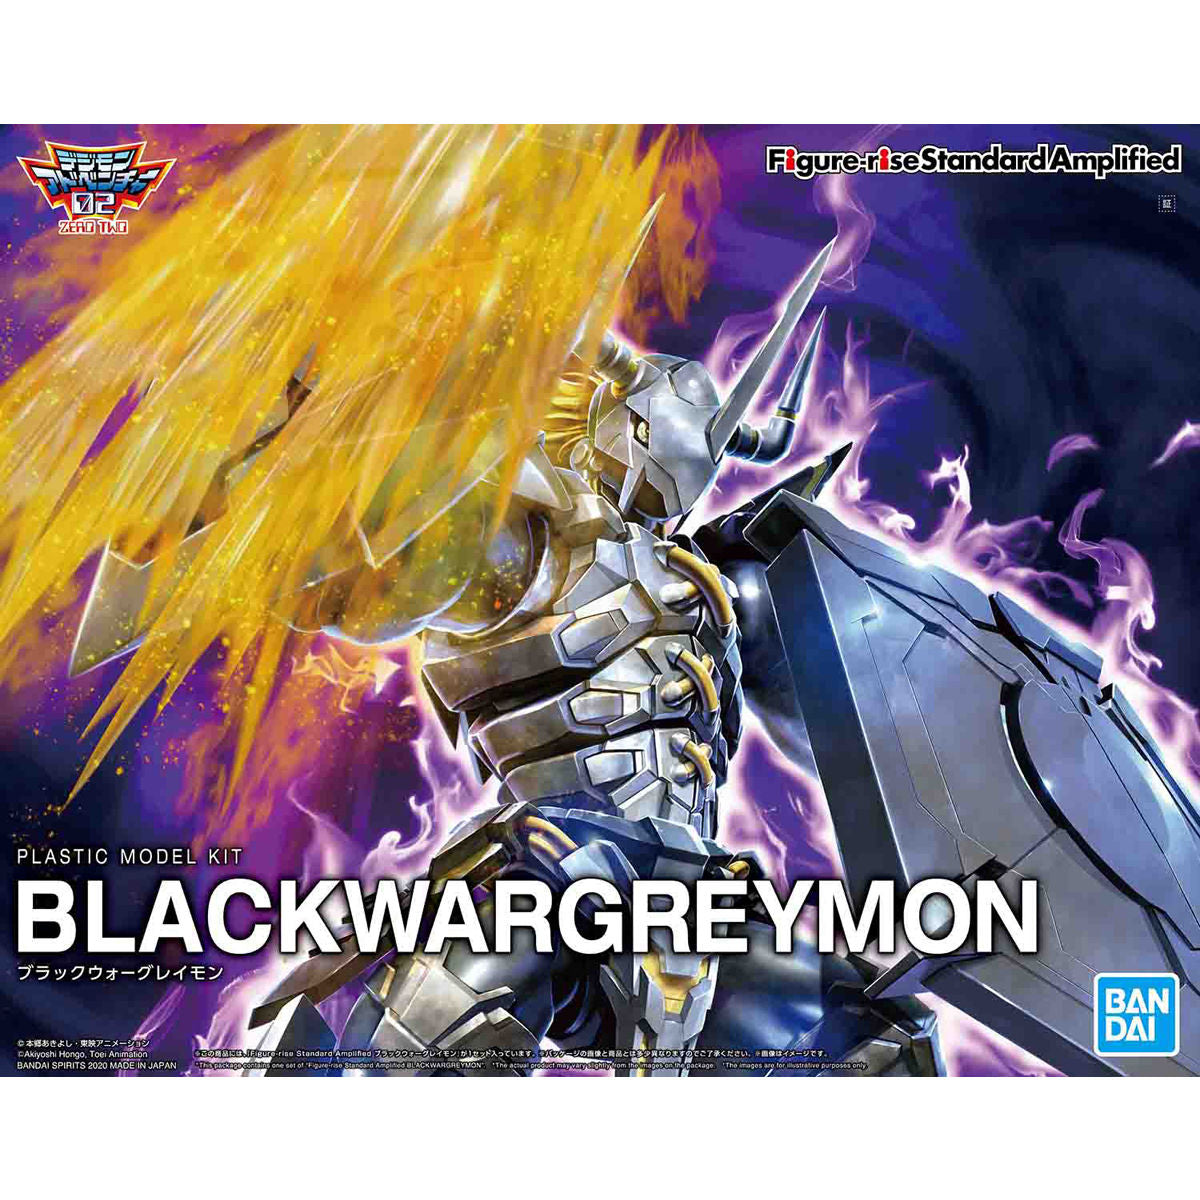 Digimon - Black WarGreymon - Figure-rise Standard Amplified Model Kit, Includes 2 Dramon Killers, 1 set of wing parts, 2 effect parts, 1 foil sticker sheet, Franchise: Digimon, Brand: Bandai, Release Date: 2020-09-12, Type: Model Kit, Nippon Figures